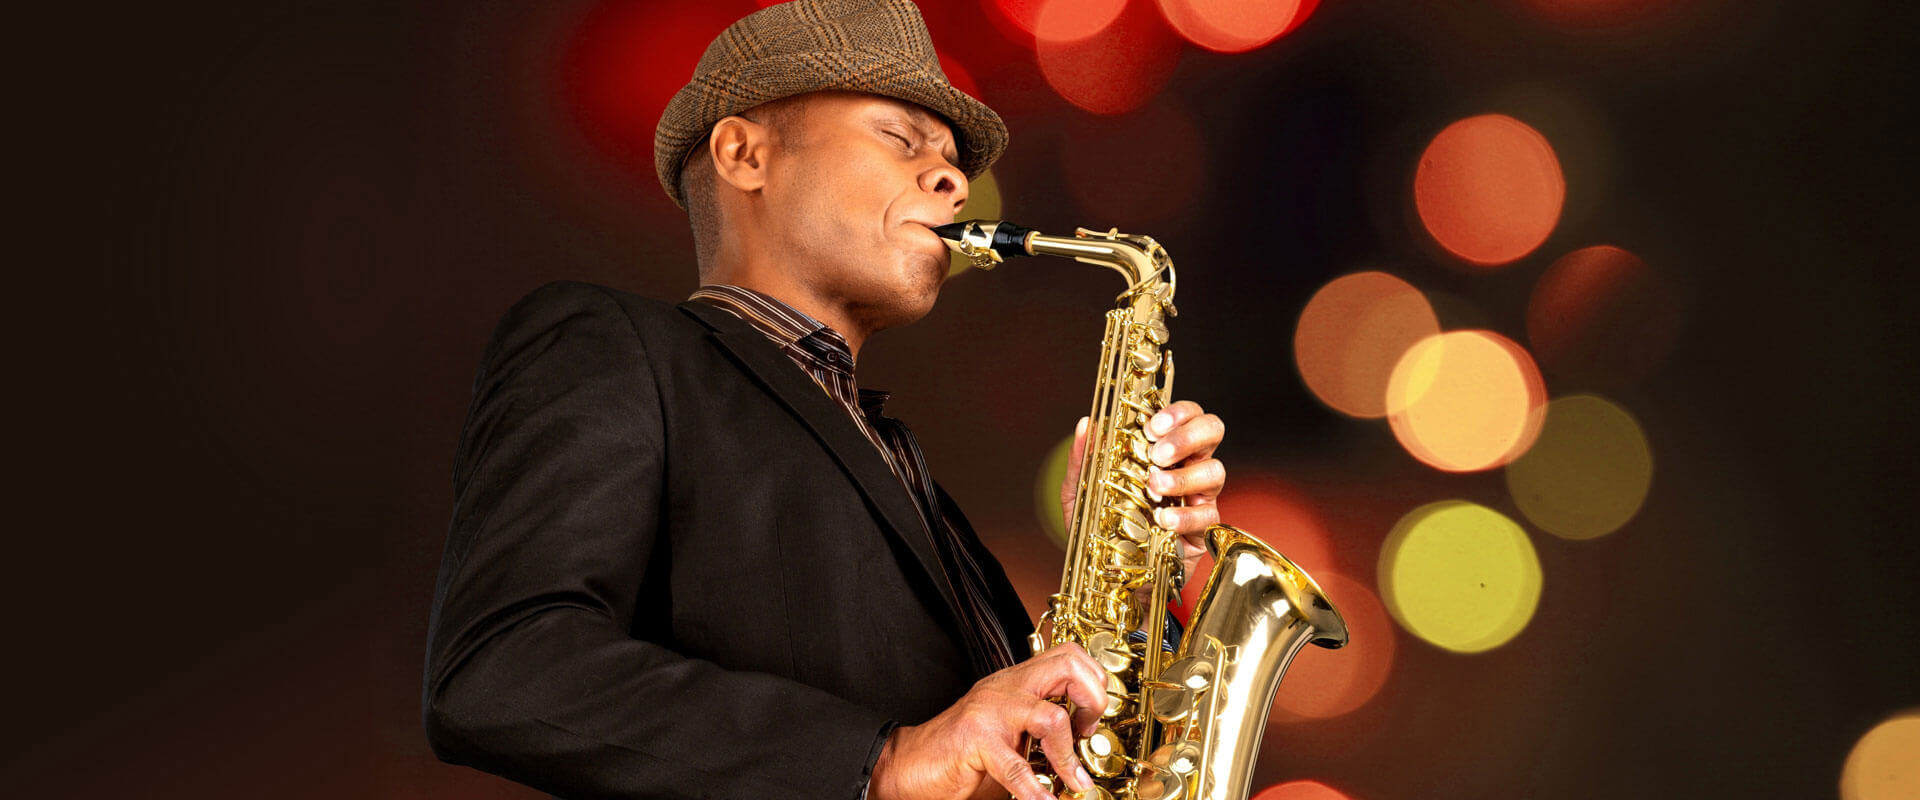 Saxophone Lessons Greenwich, VA